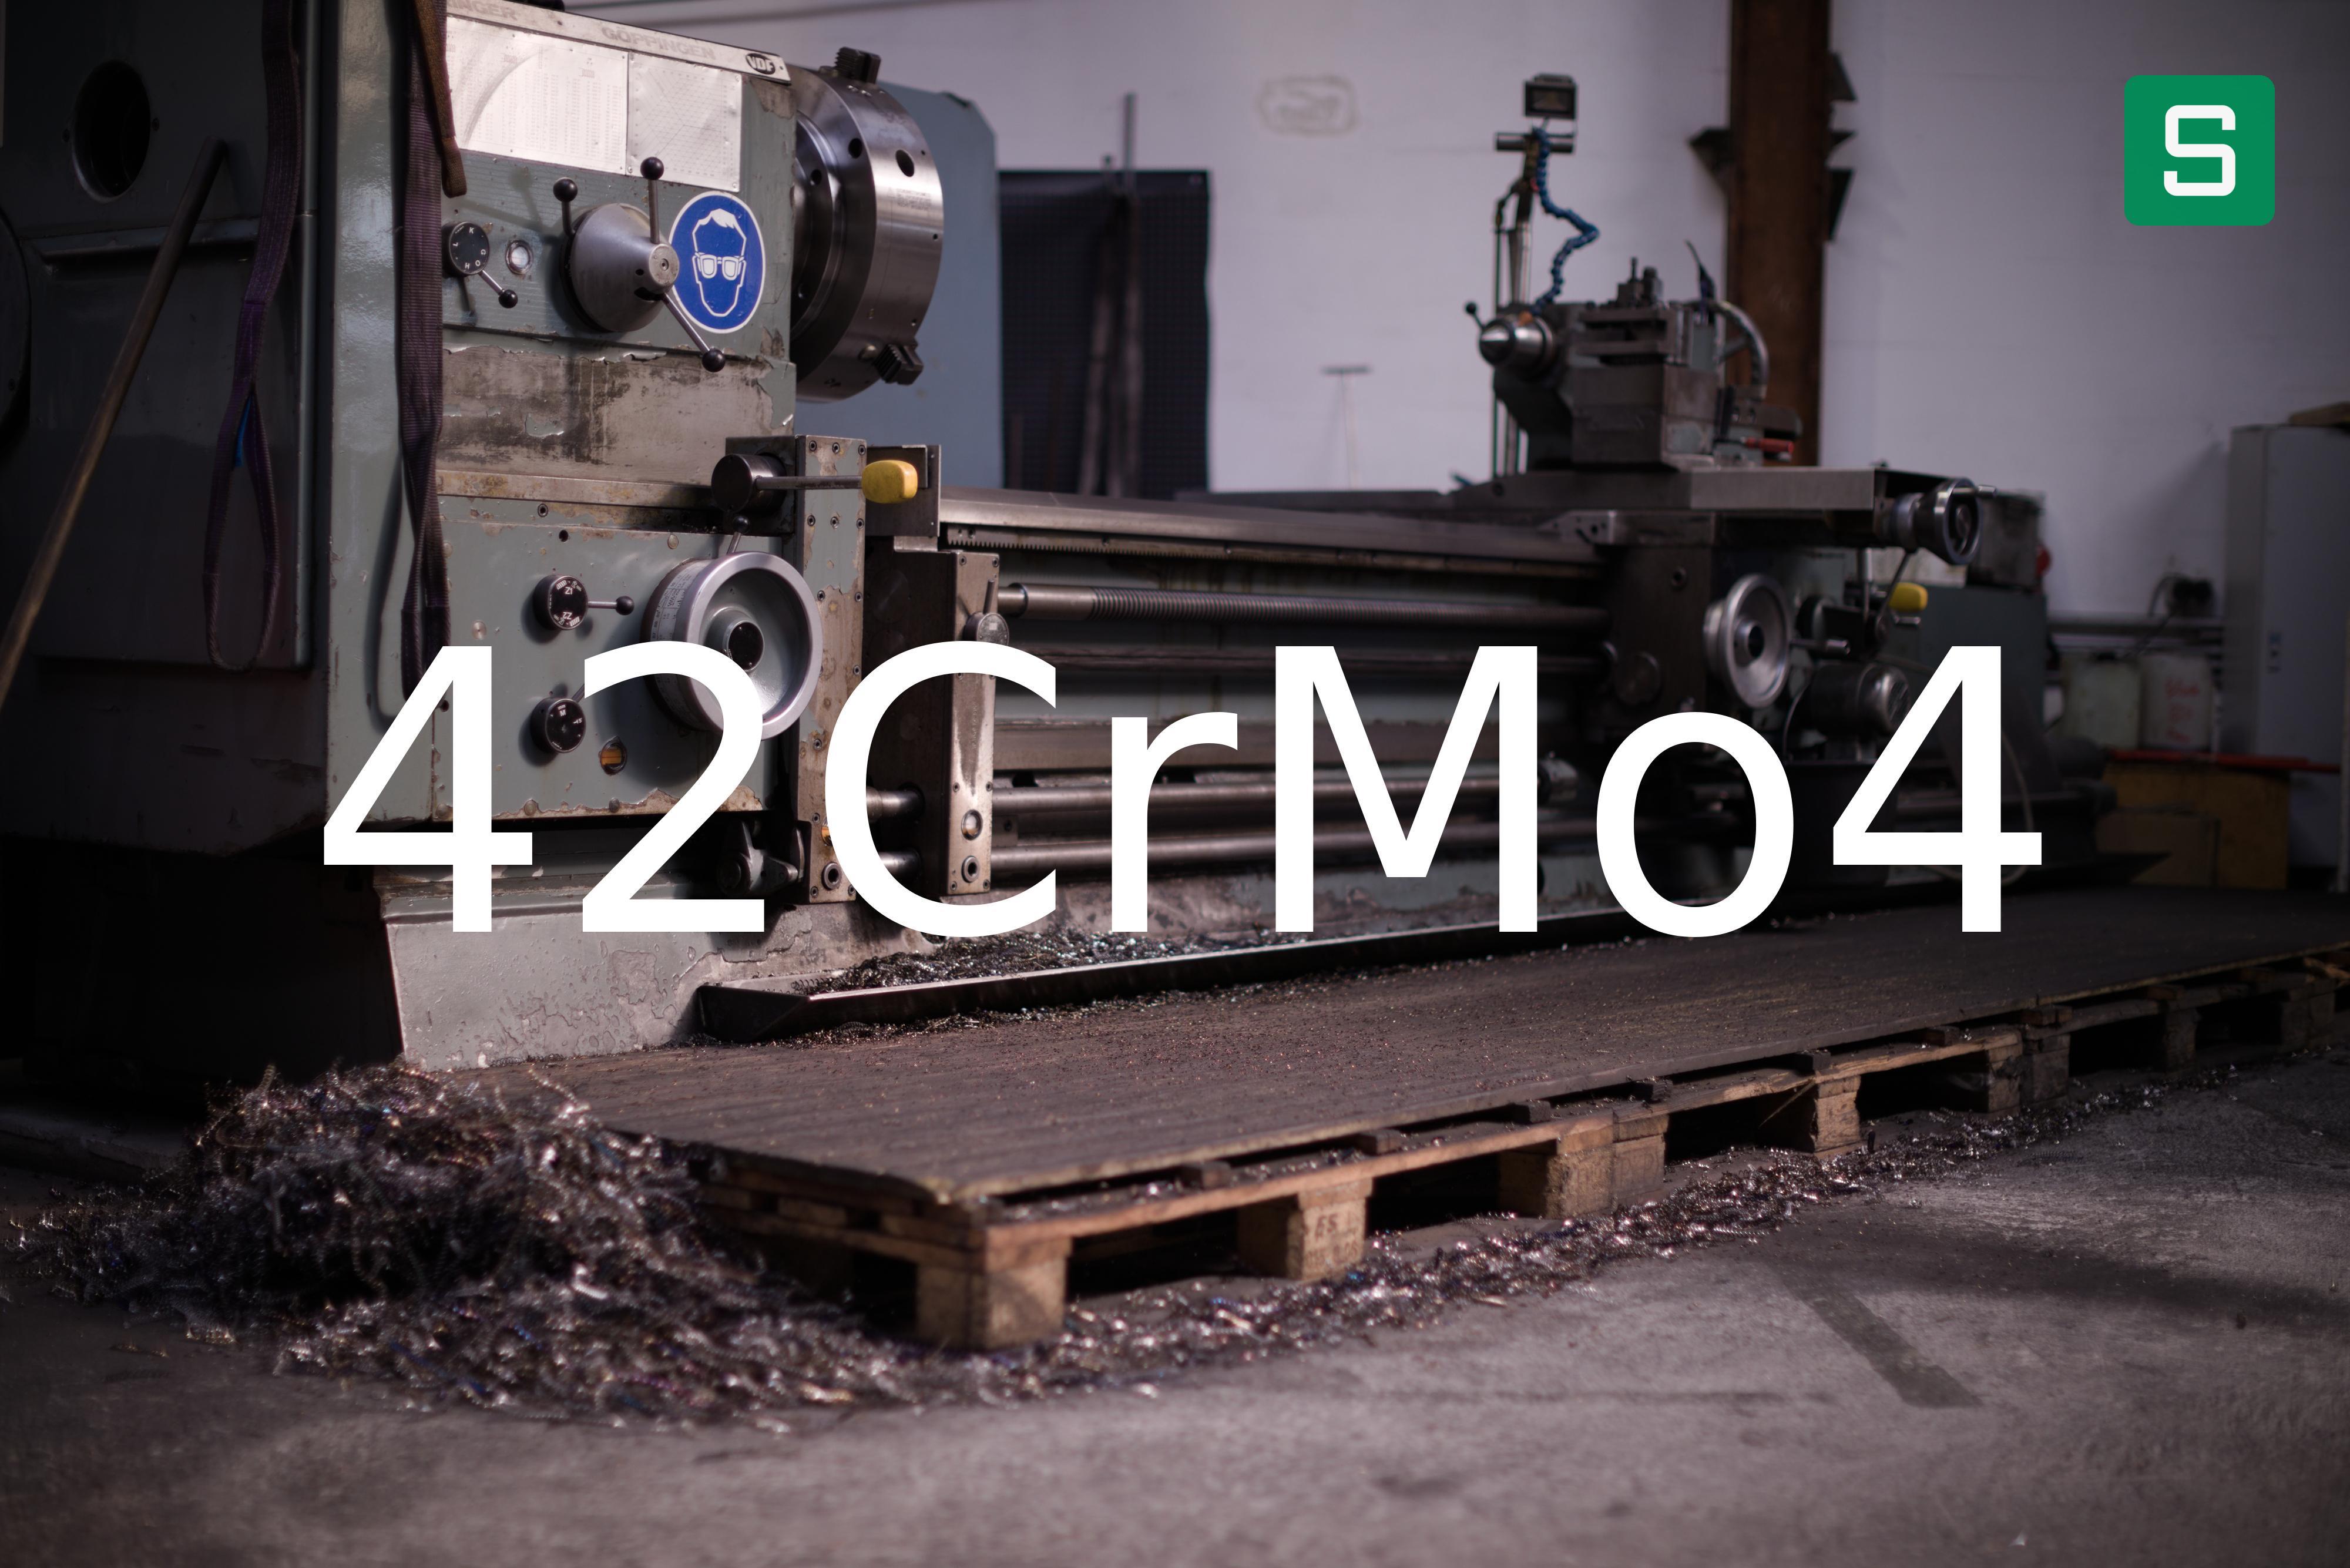 Steel Material: 42CrMo4